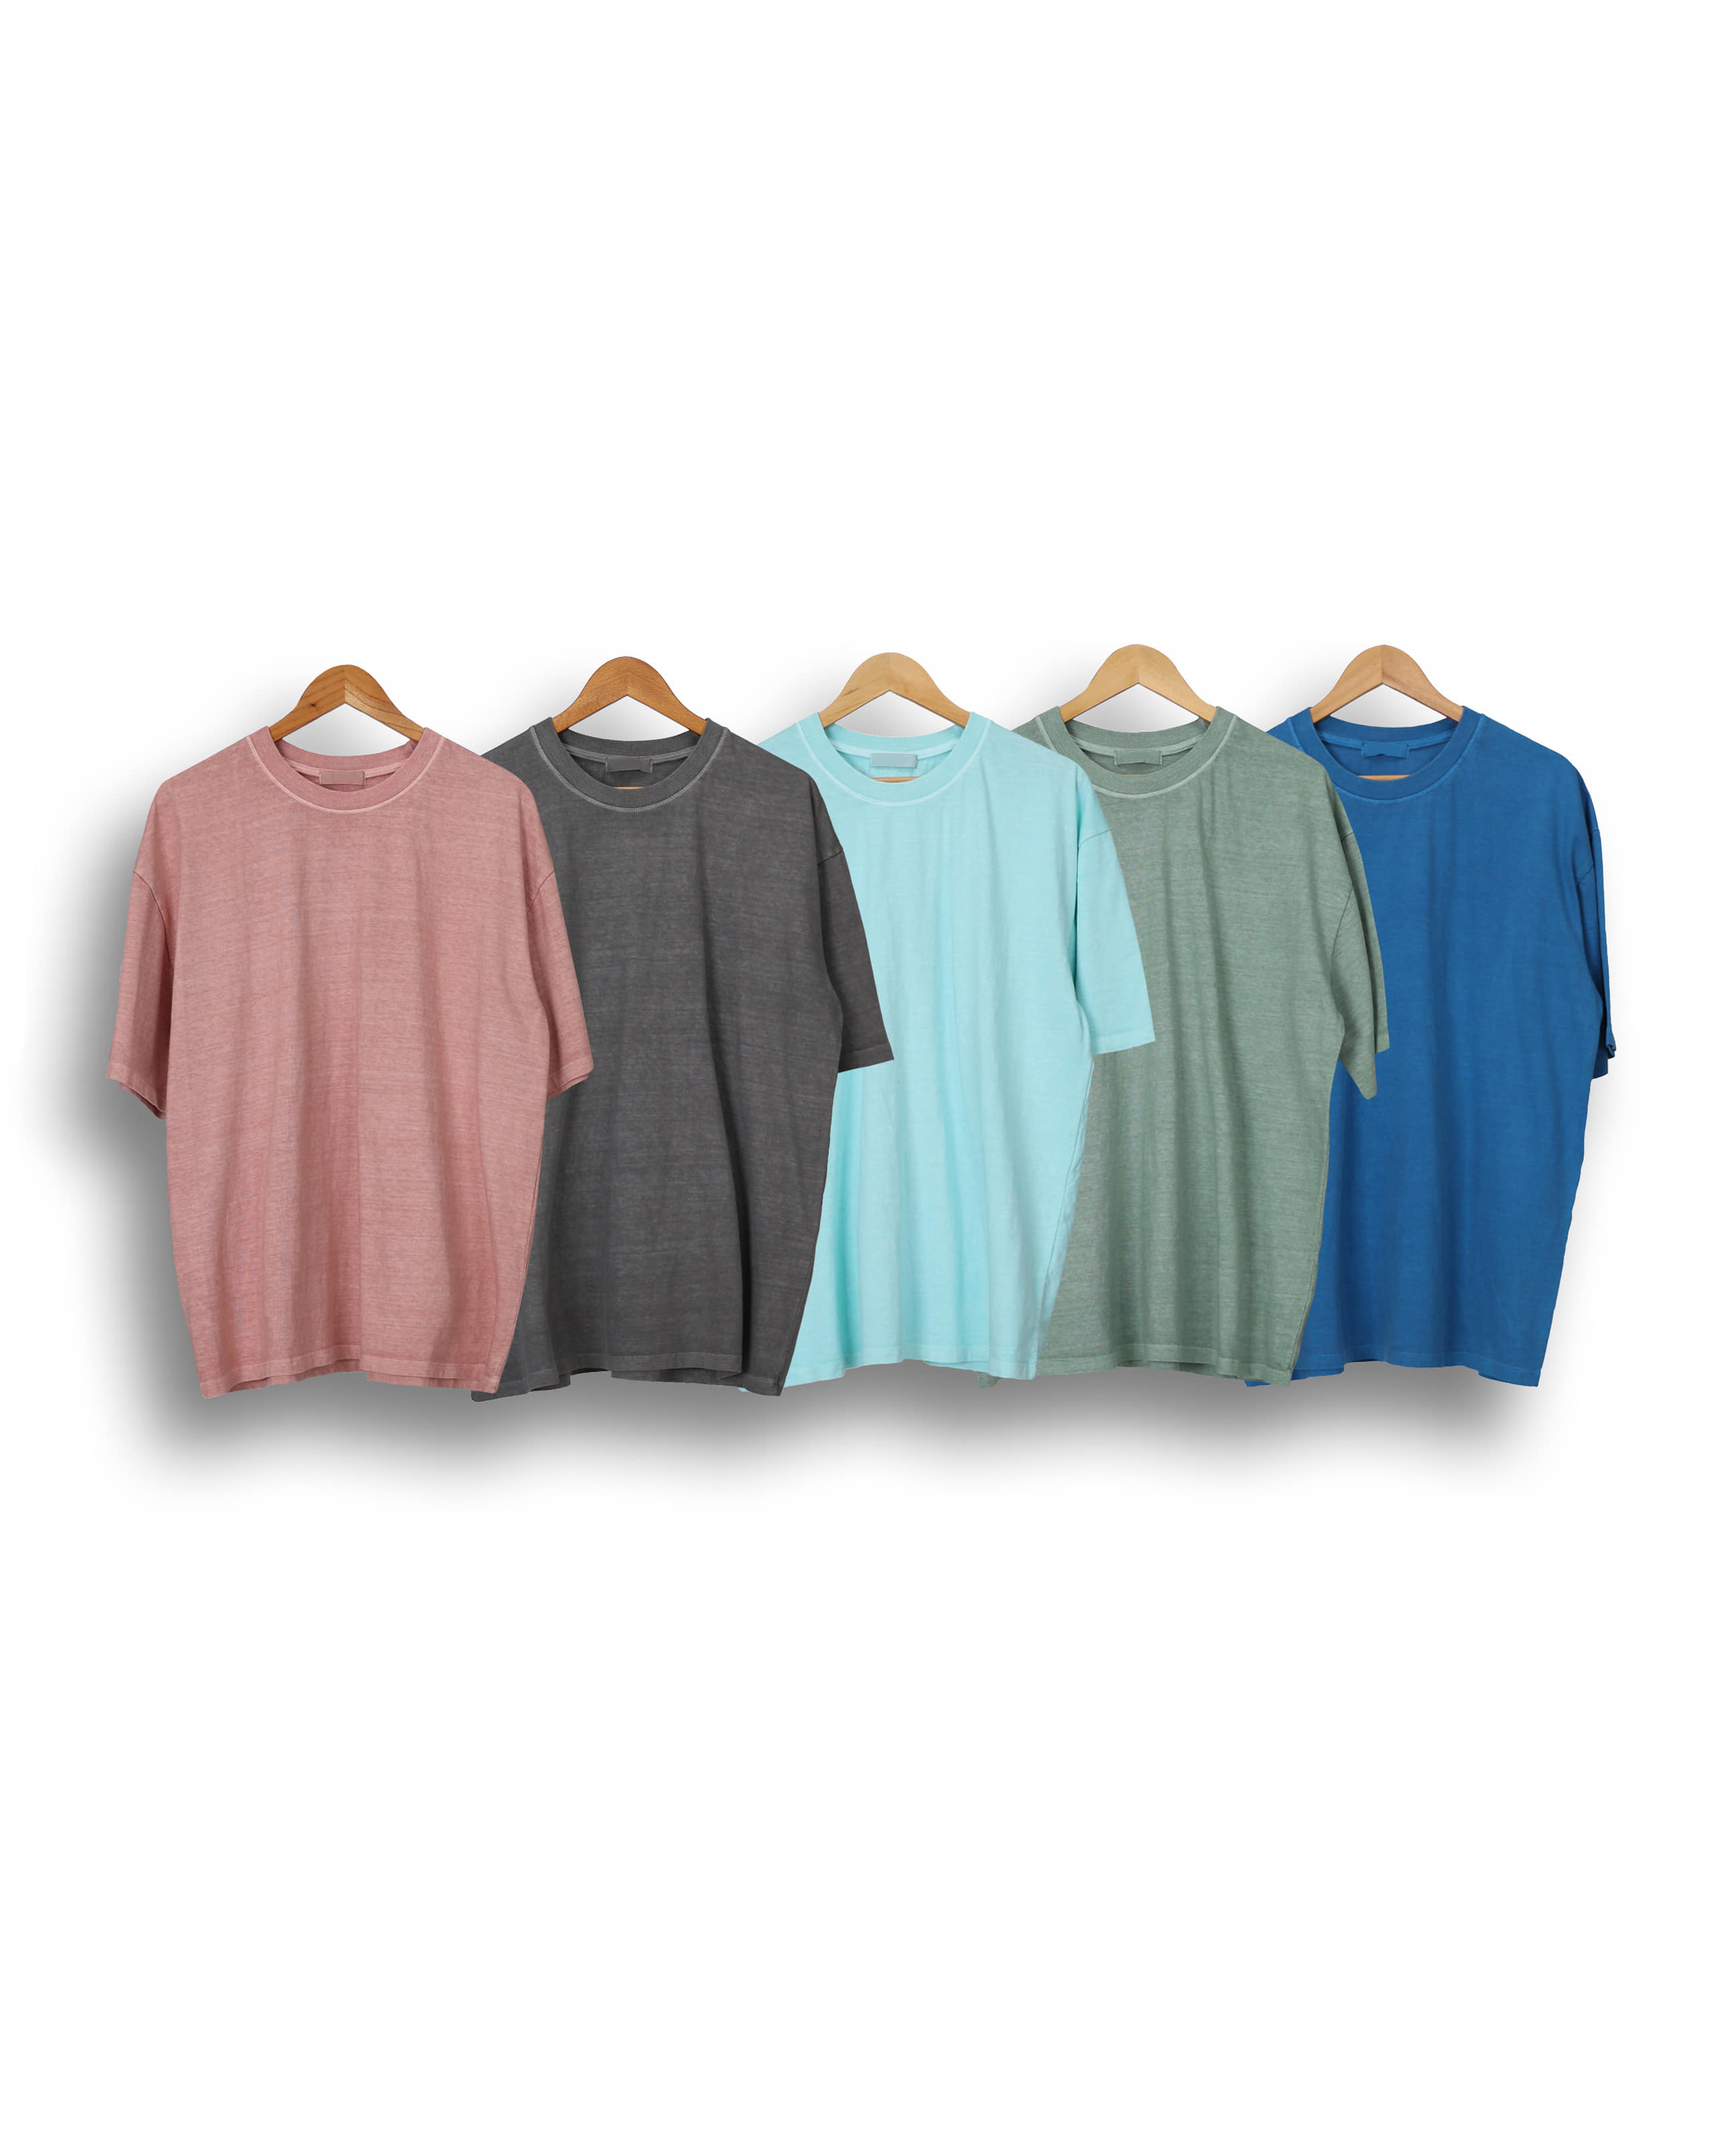 PECTOR Pigment Dying Semi Over T Shirts (Charcoal/Khaki/Blue/Mint/Pink)